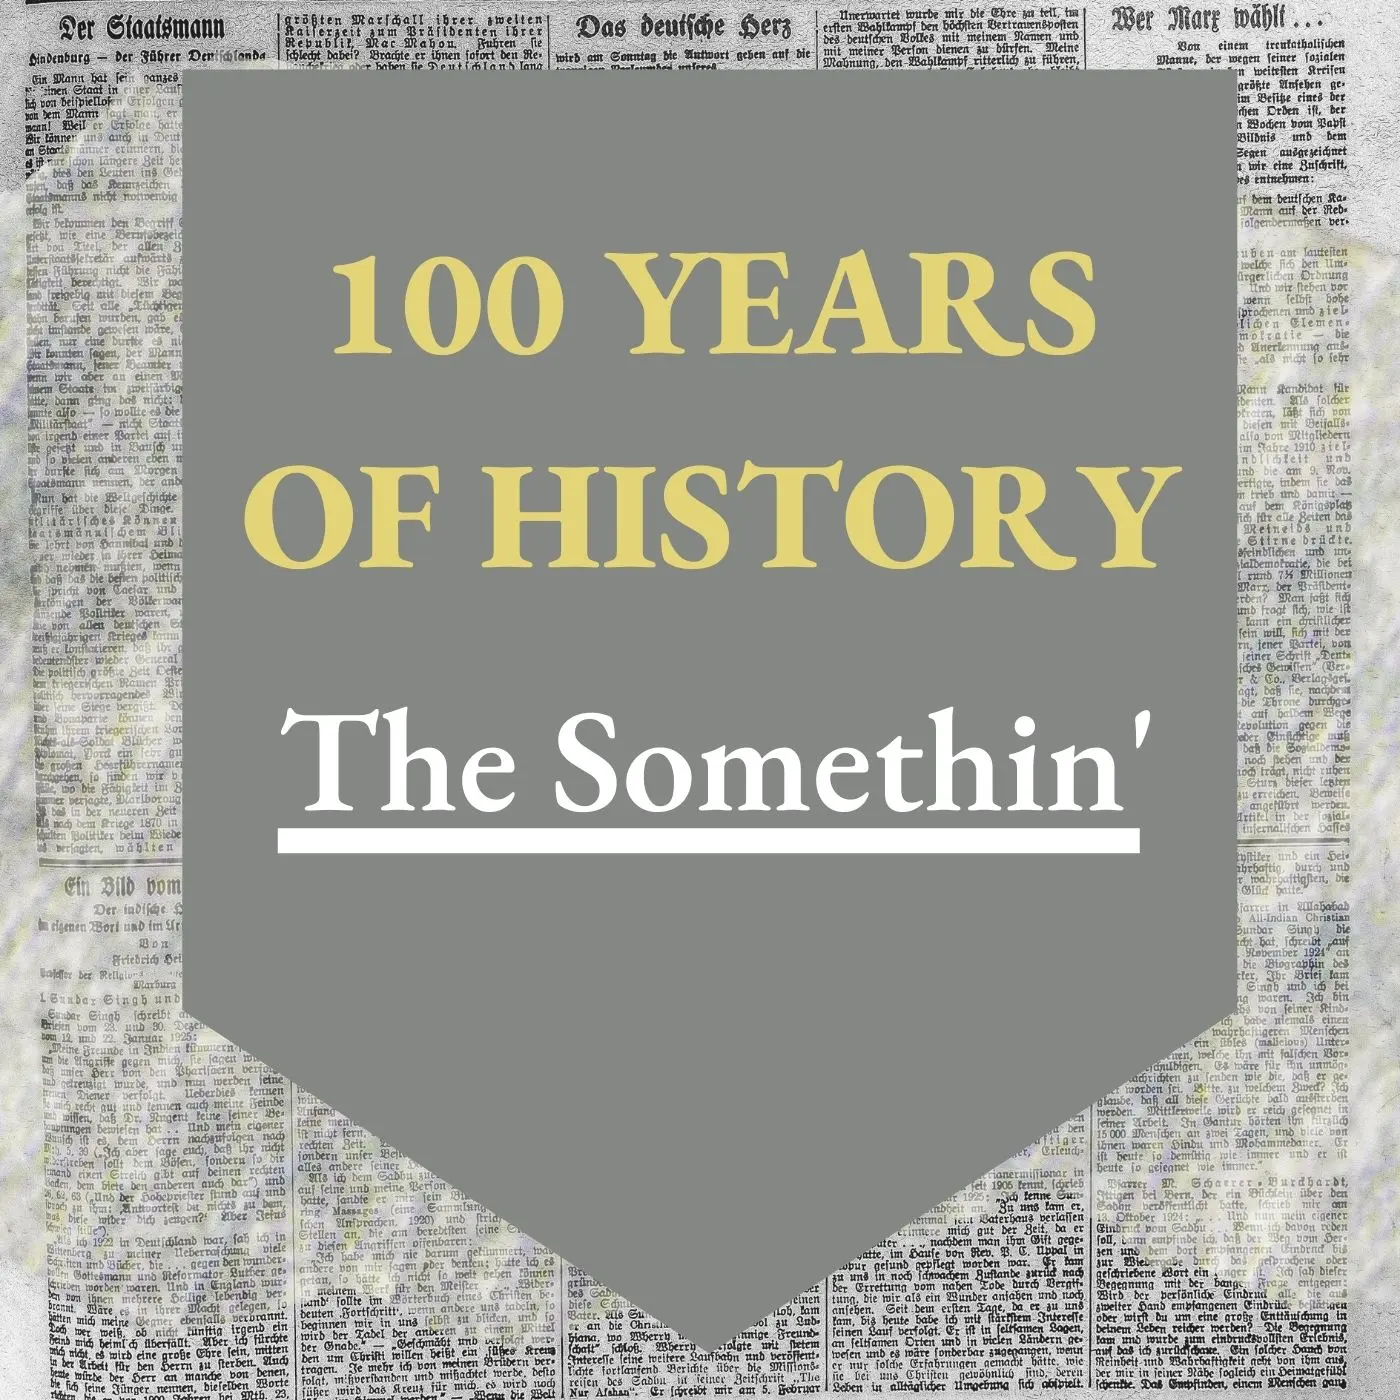 100 years of history: “Talk Perrysburg High”